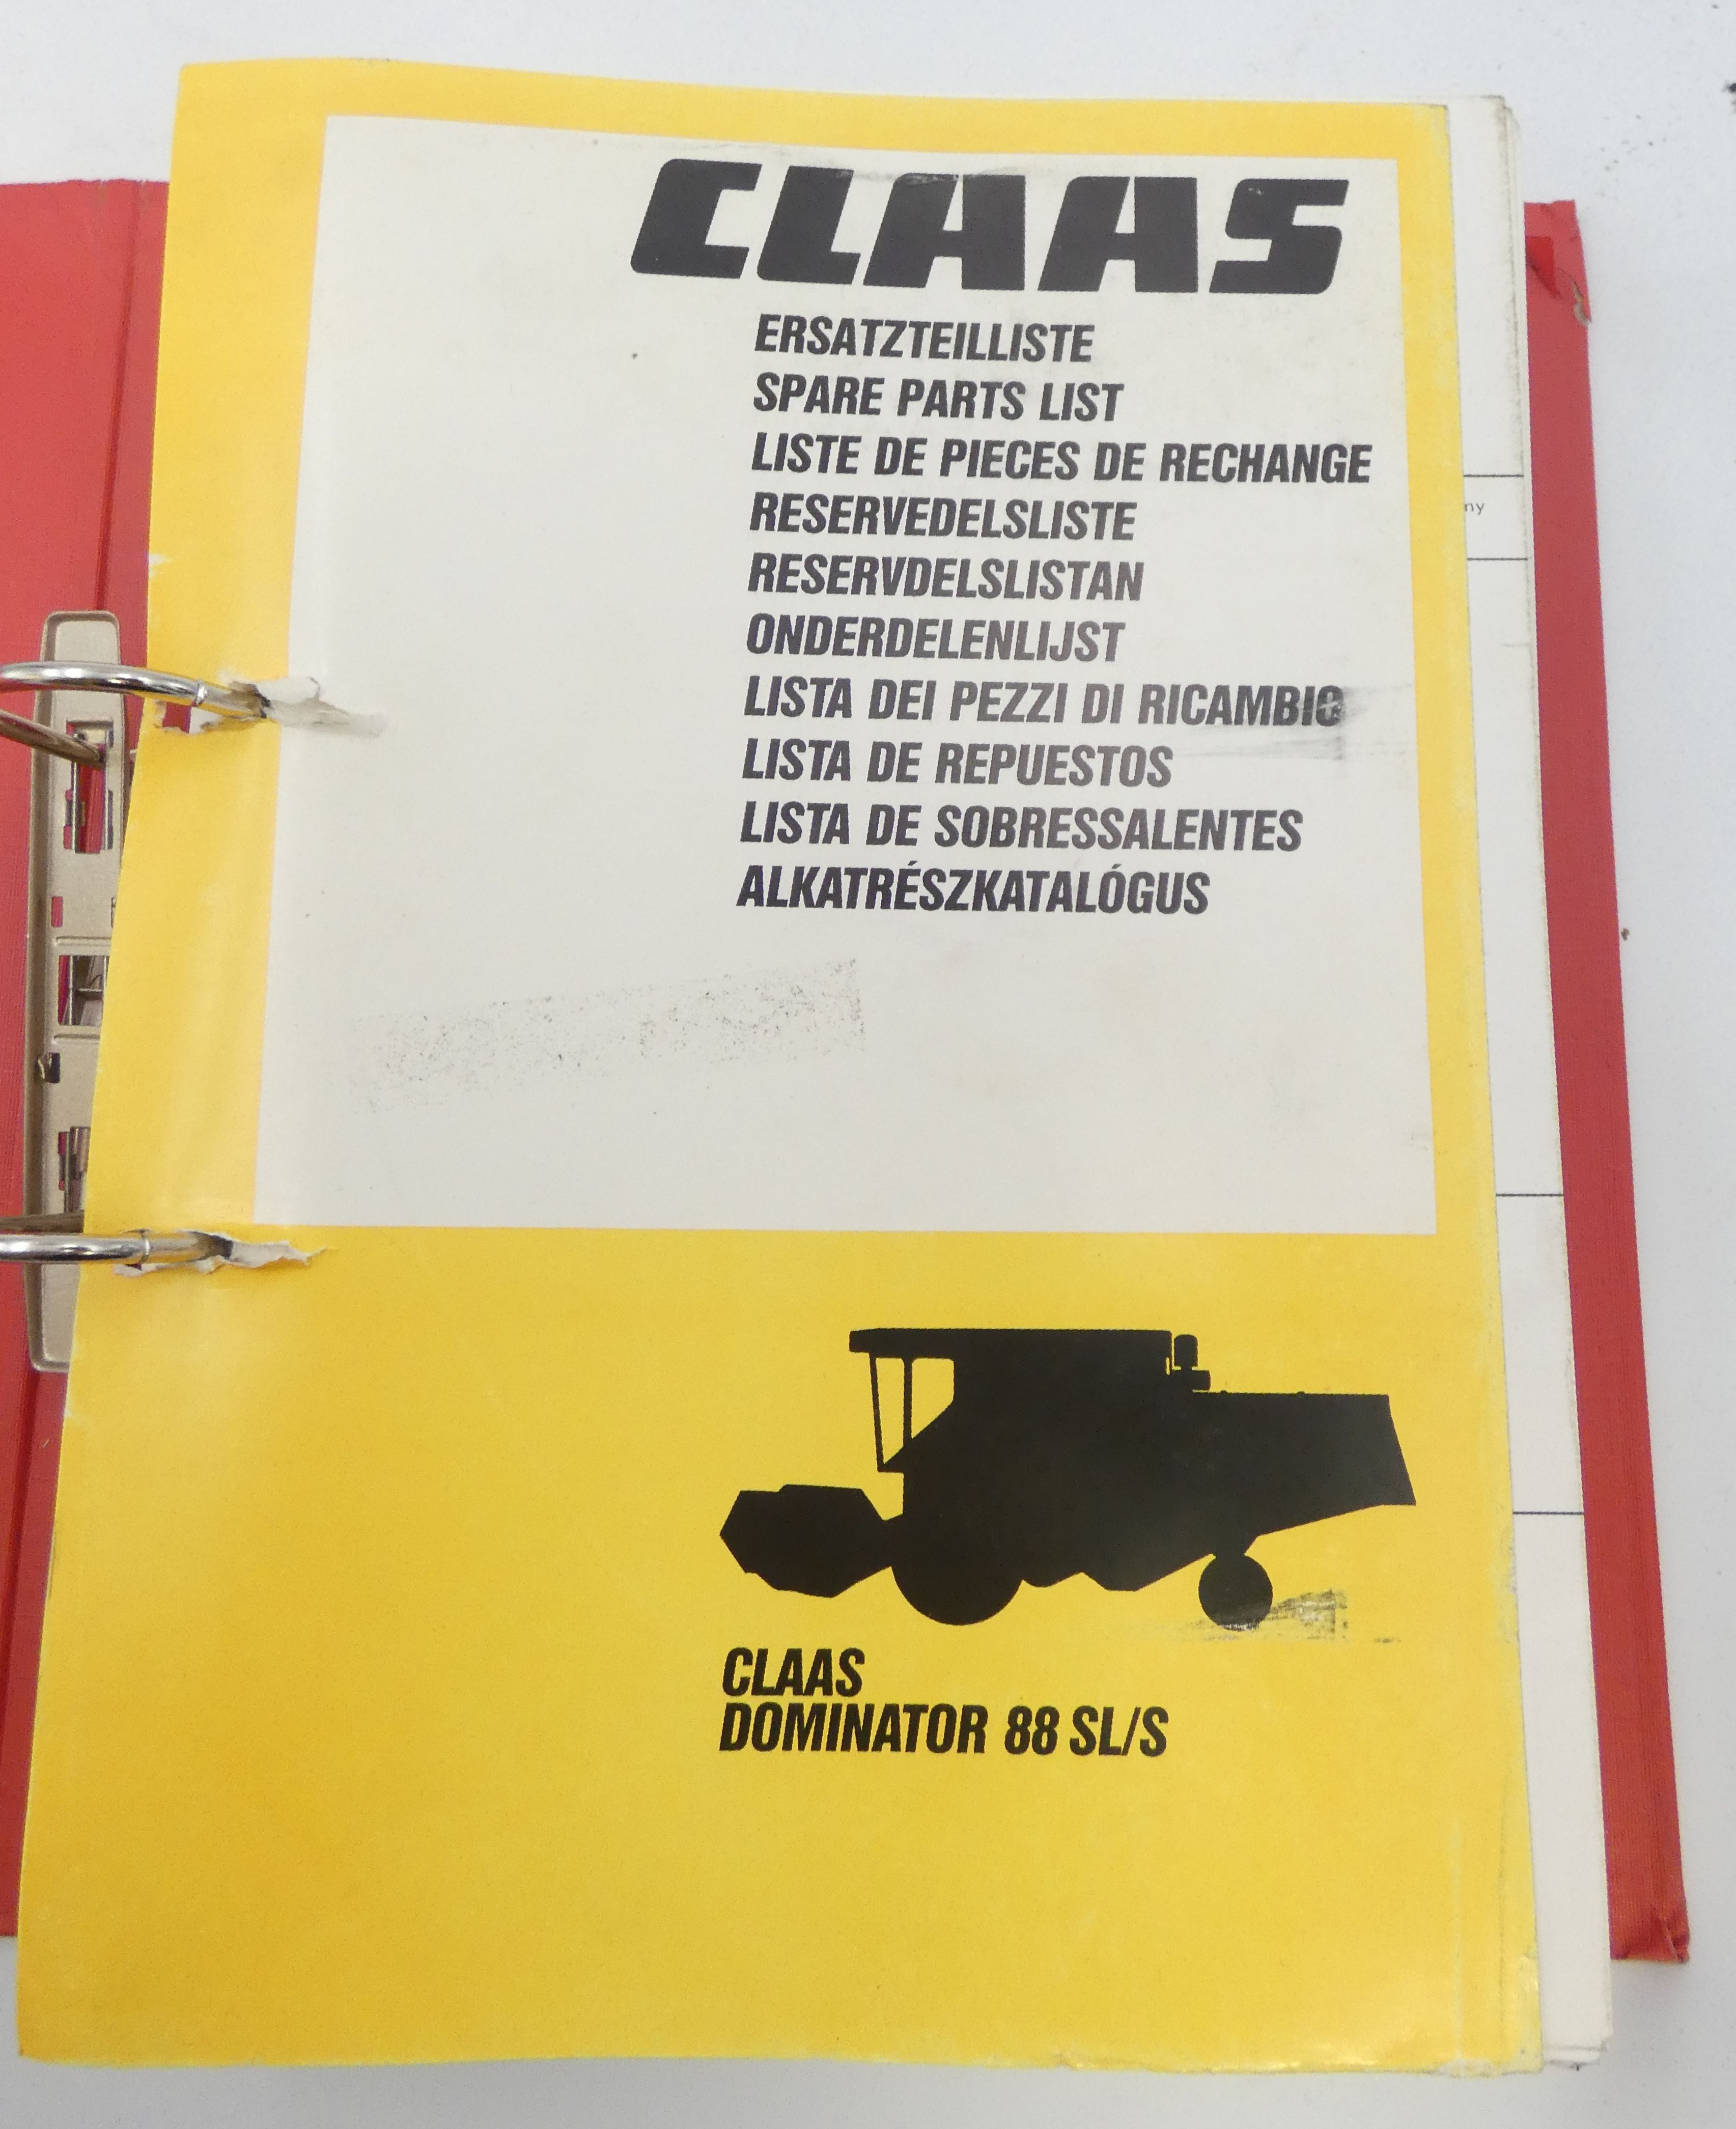 Claas Dominator 88 SL/S spare parts list